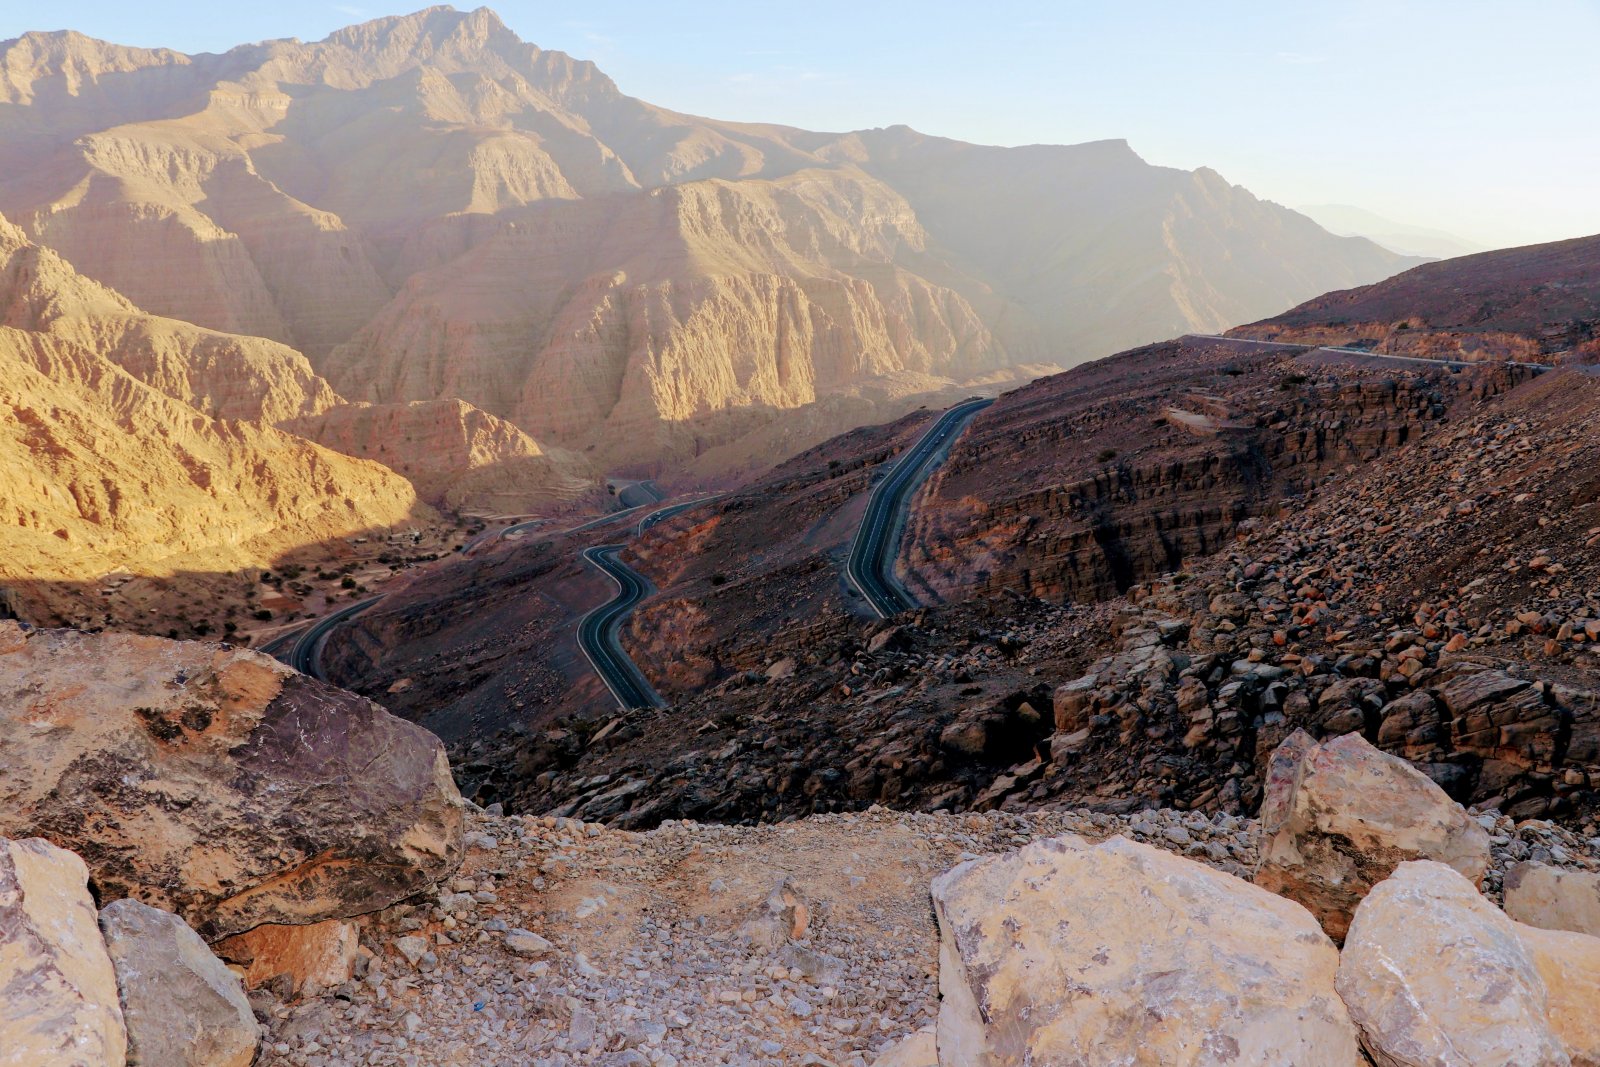 Jebel Jais by bike